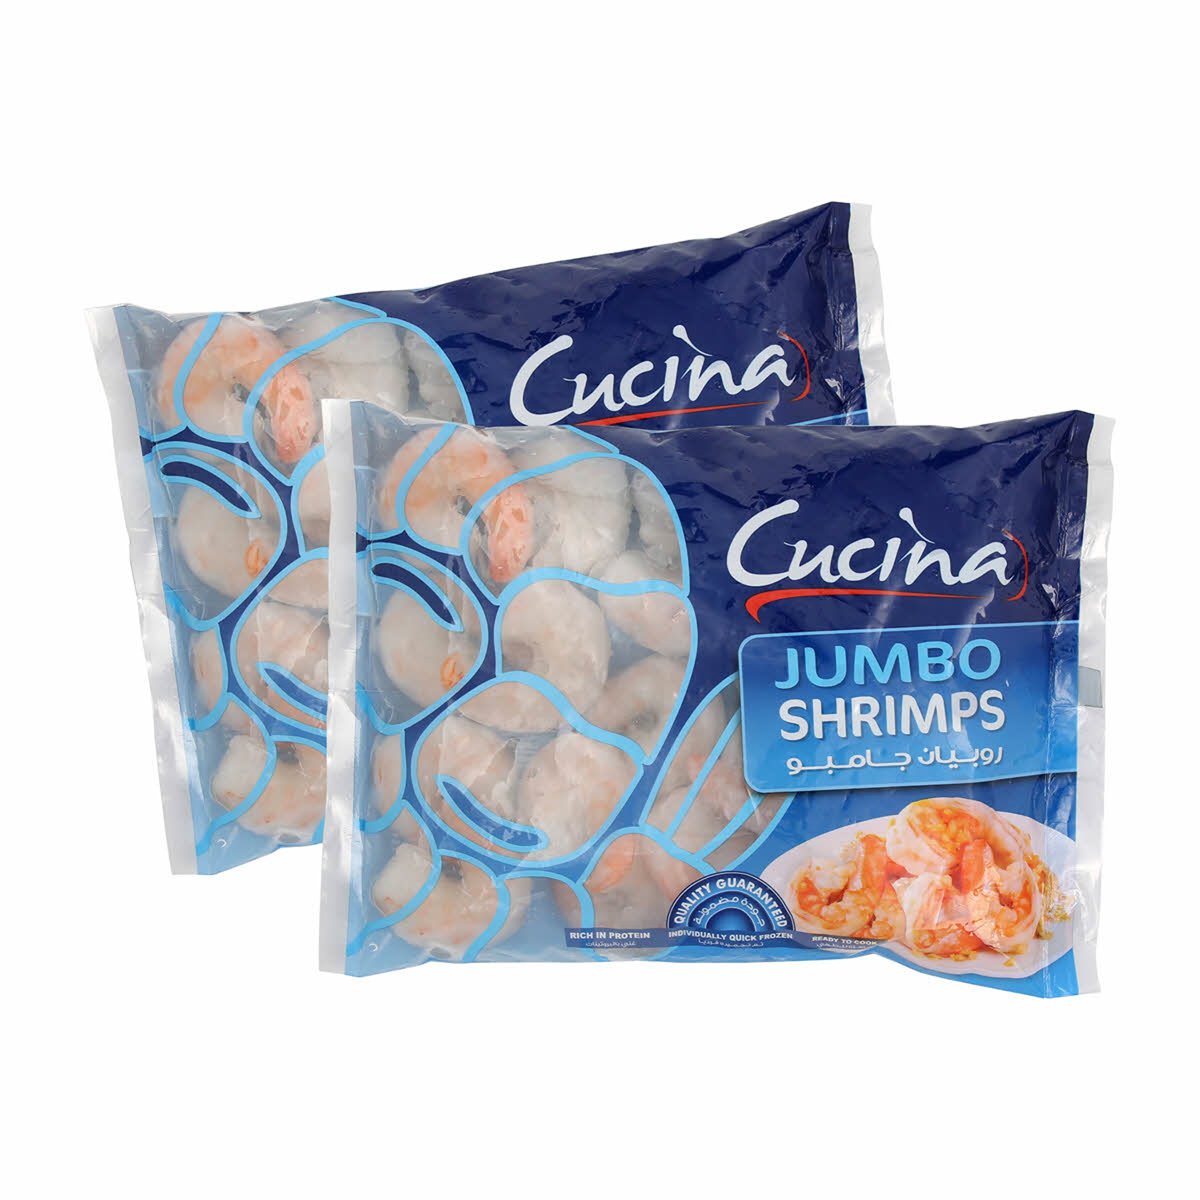 Cucina Jumbo Shrimps 800 g 1+1